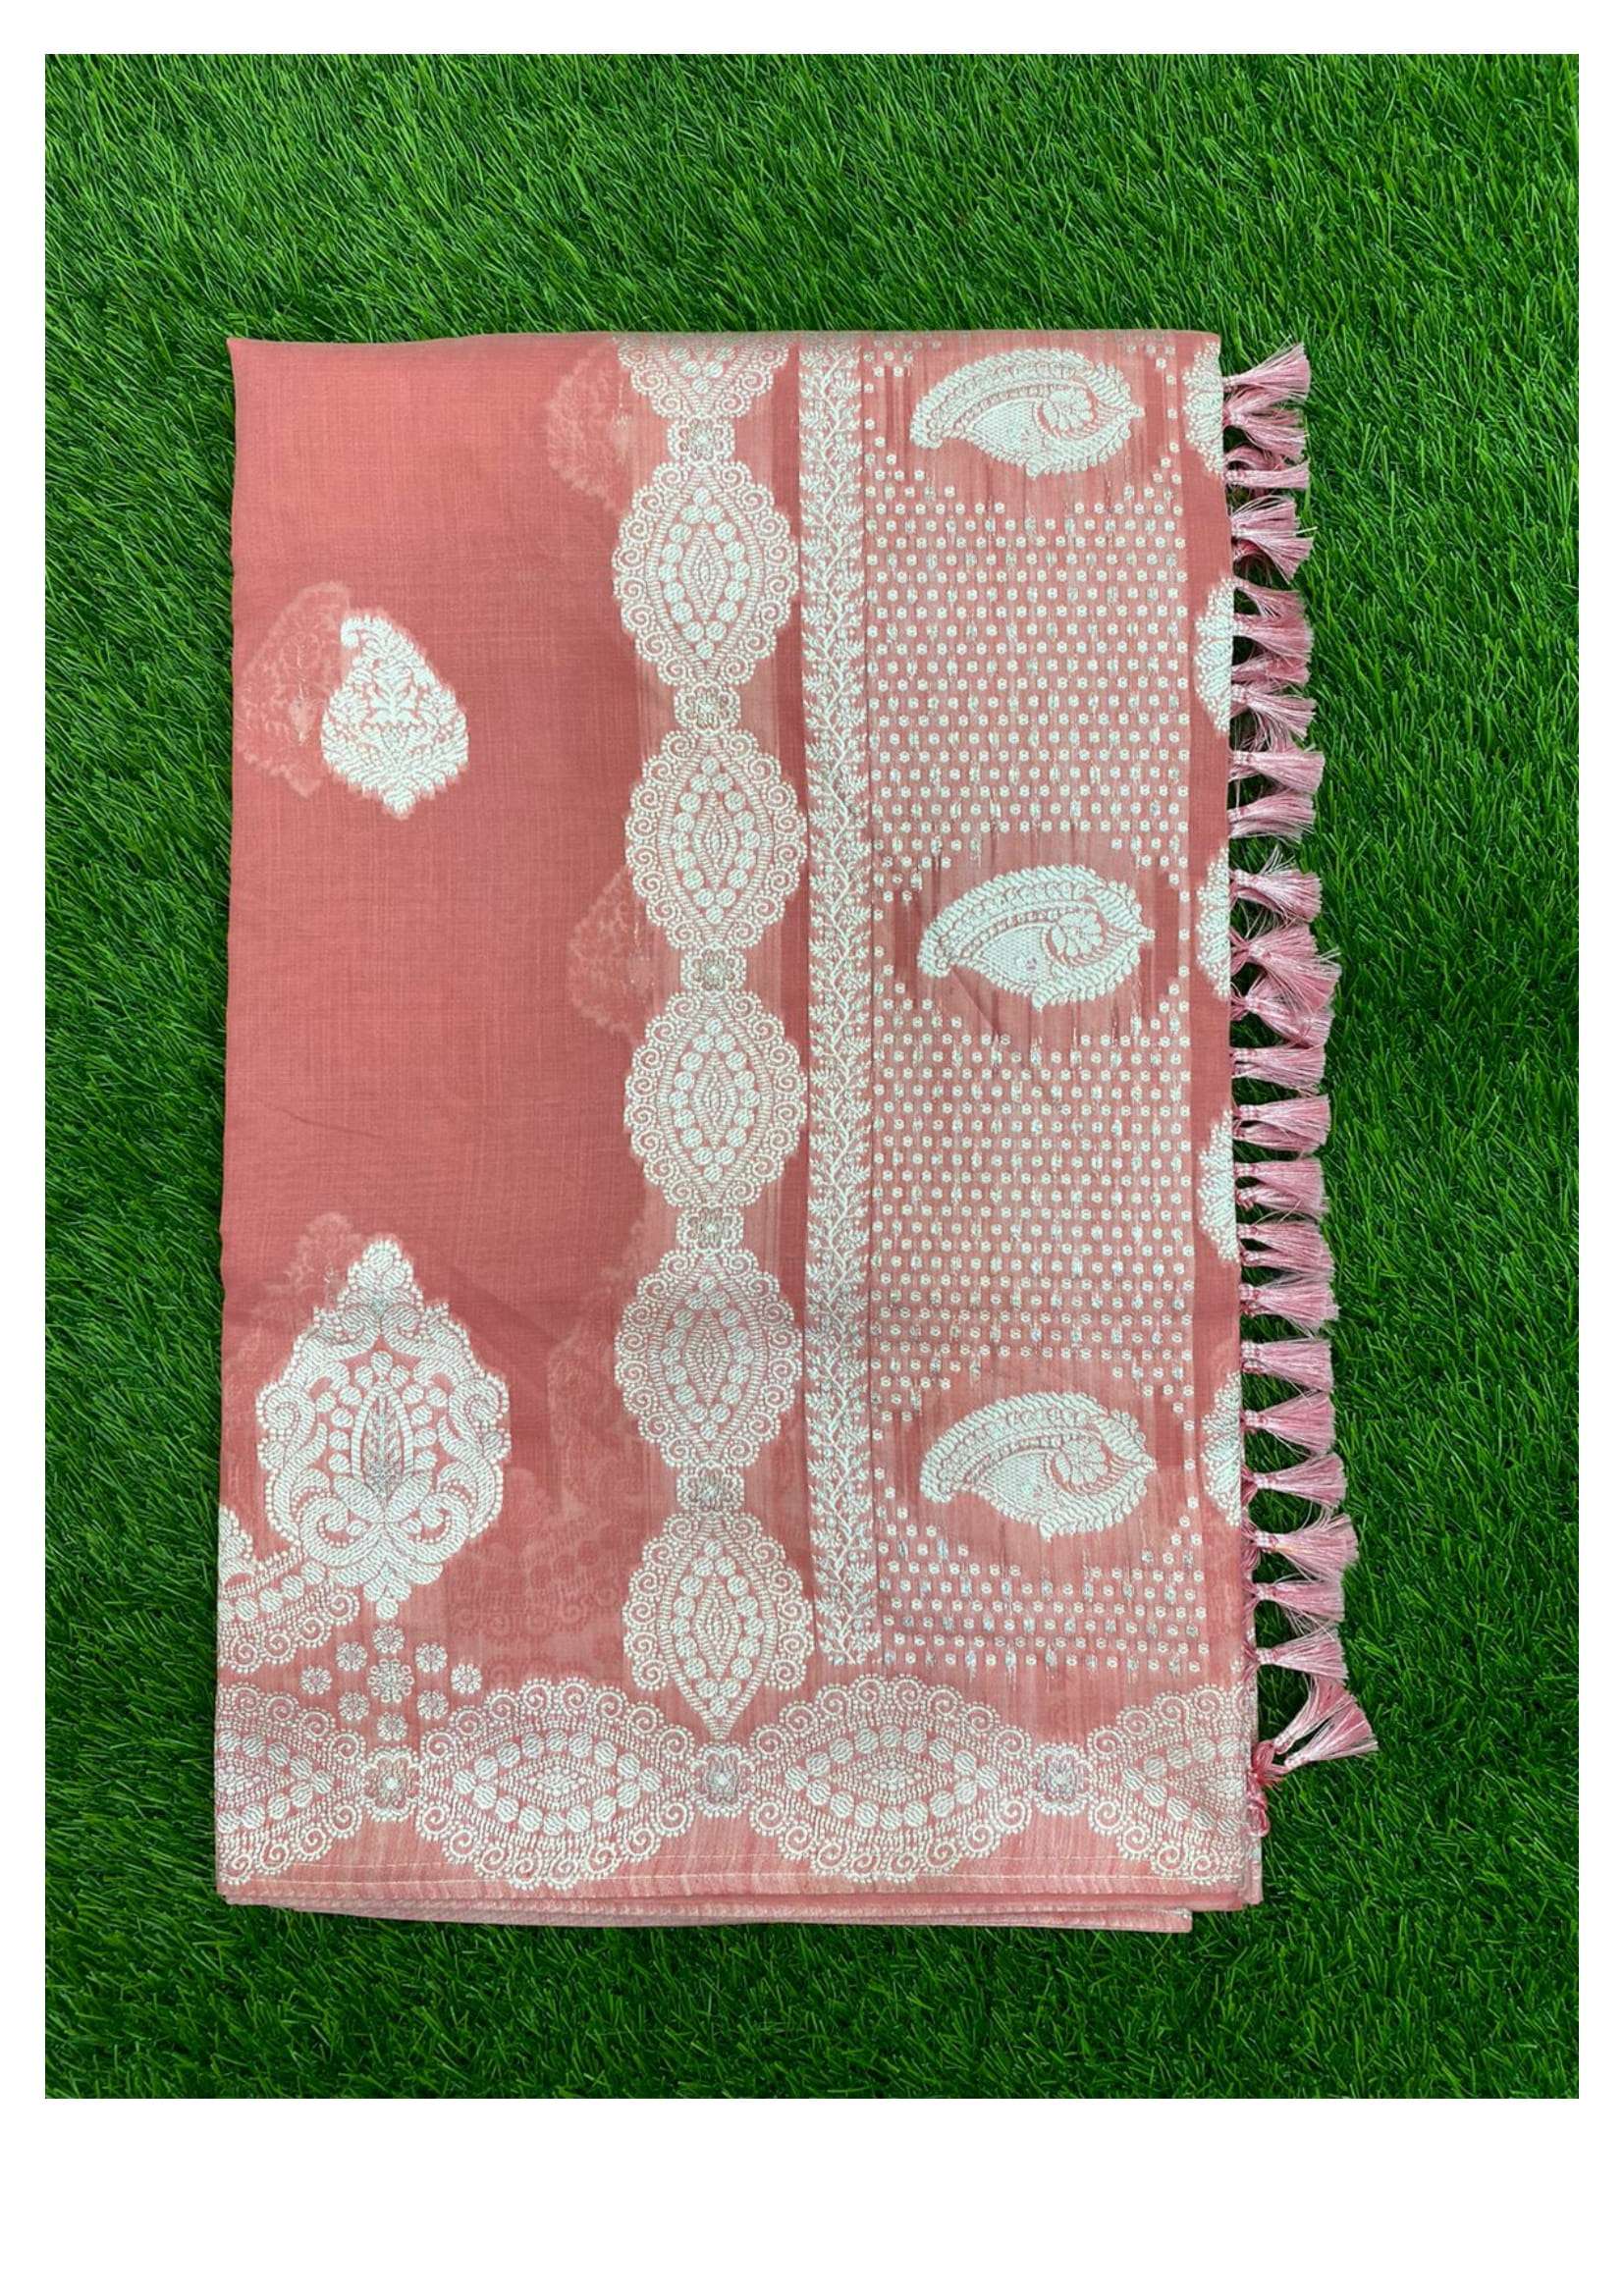 shangrila pure lucknowi sarees best seeler in surat cloth market 